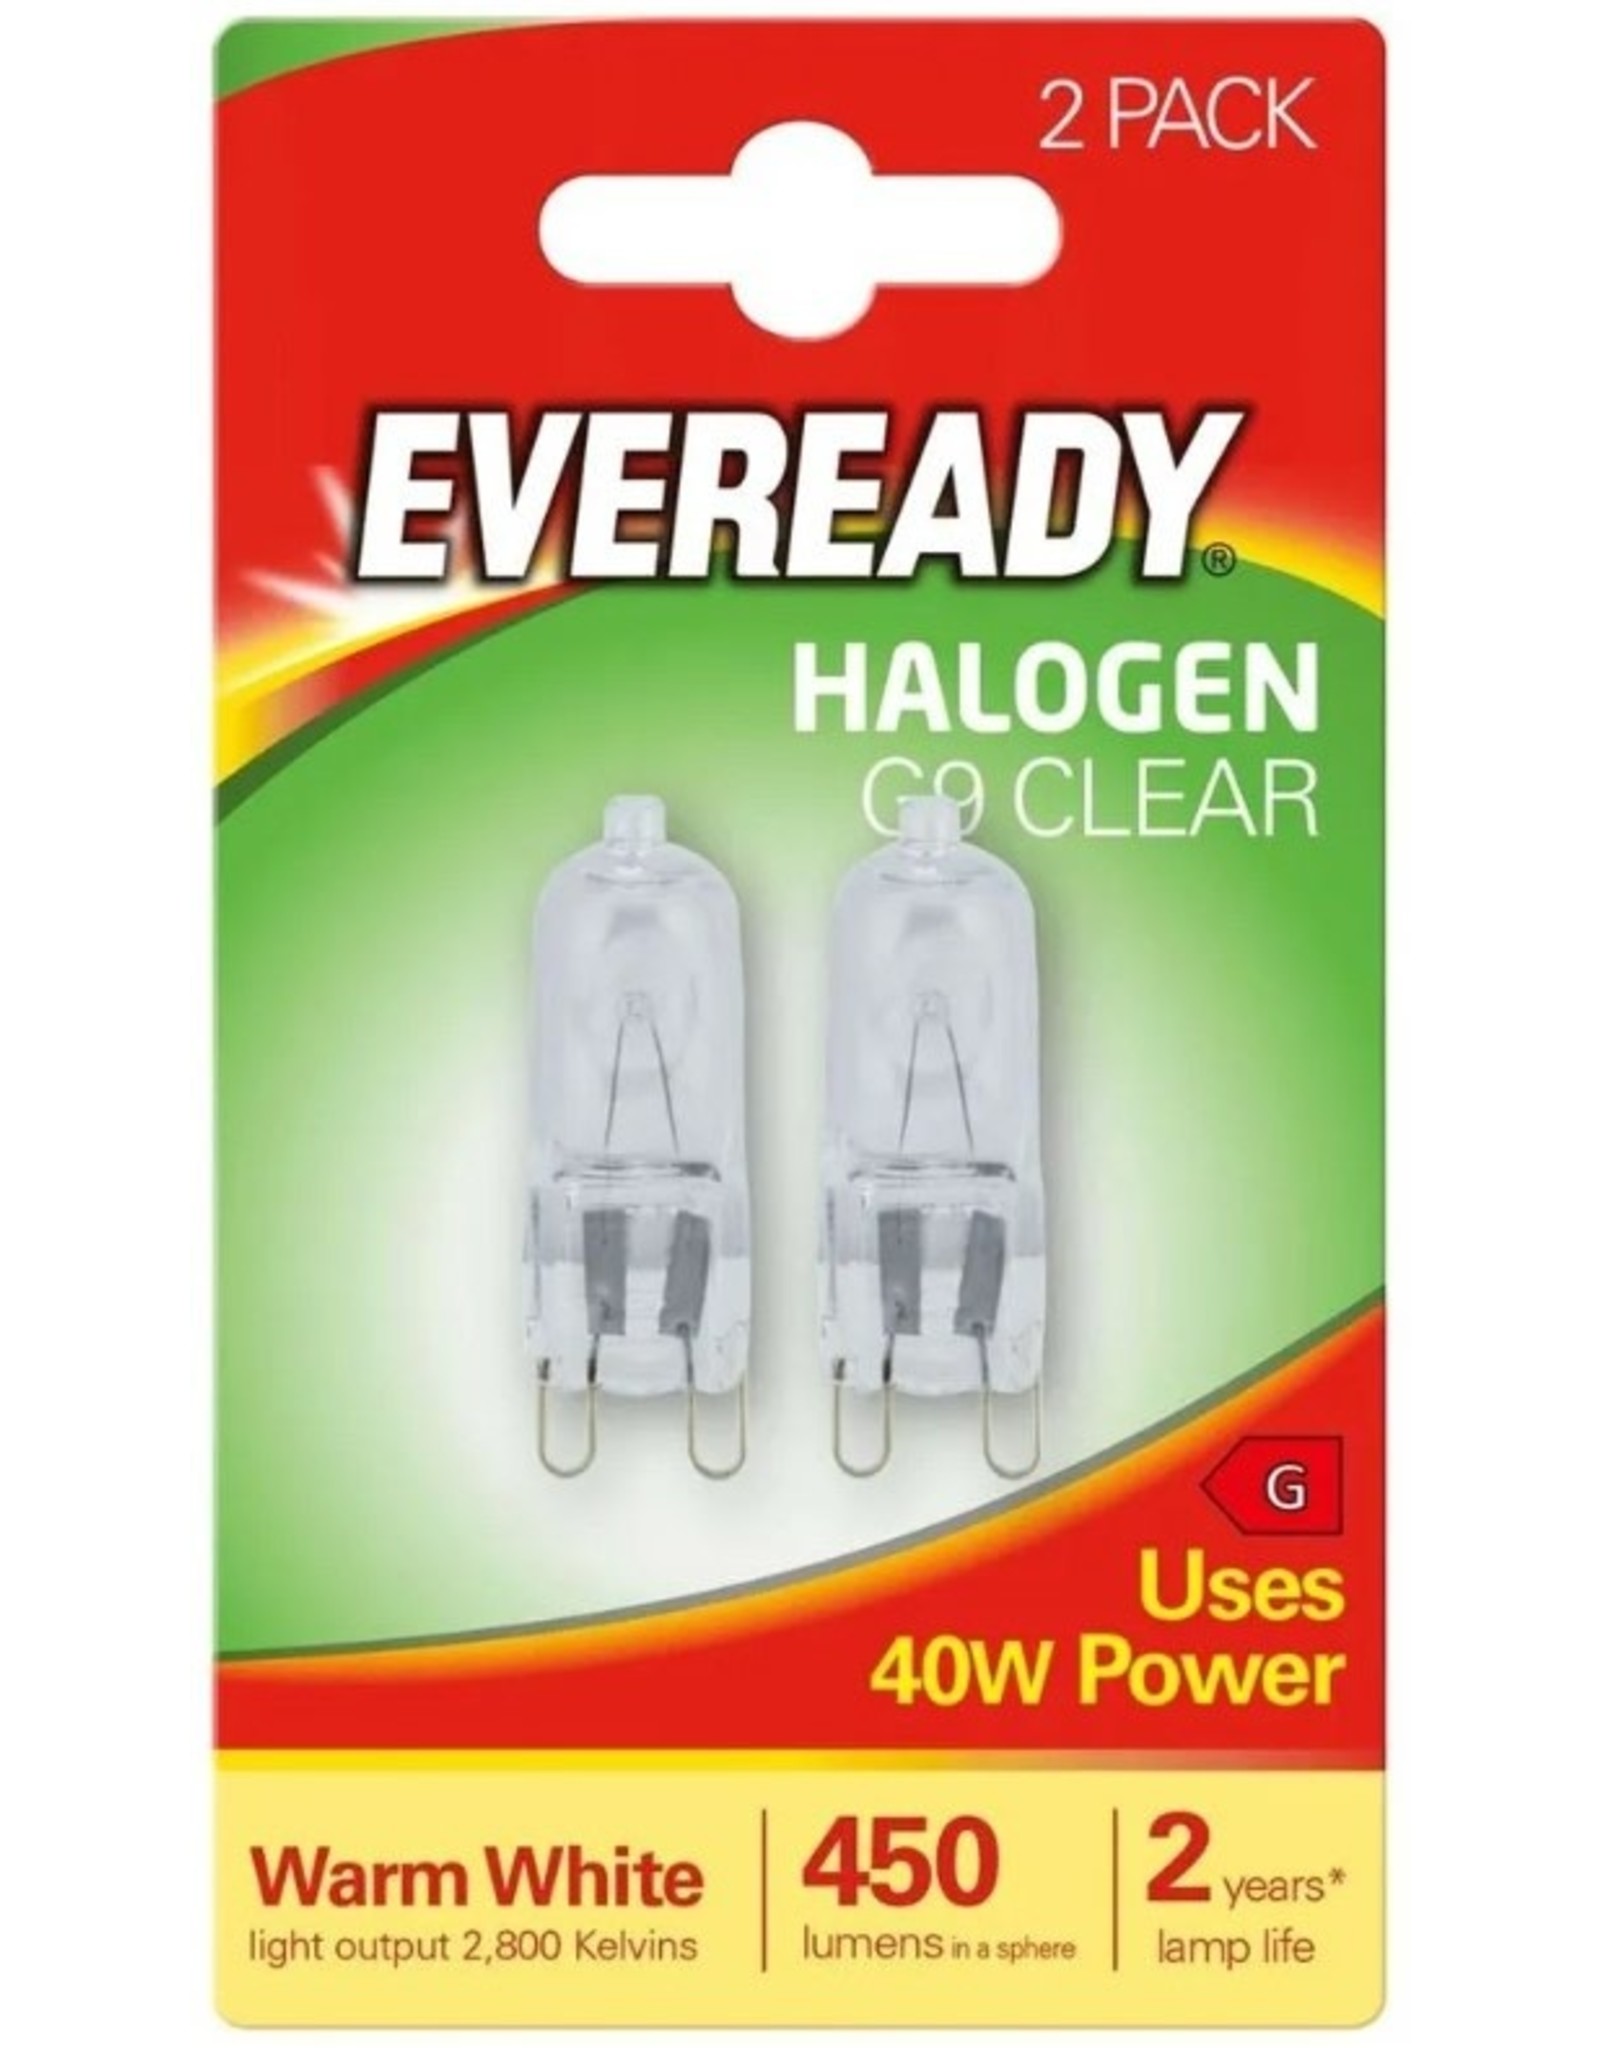 eveready Eveready halogeen capsule g9 230v 40w 2800k 450lm blister 2